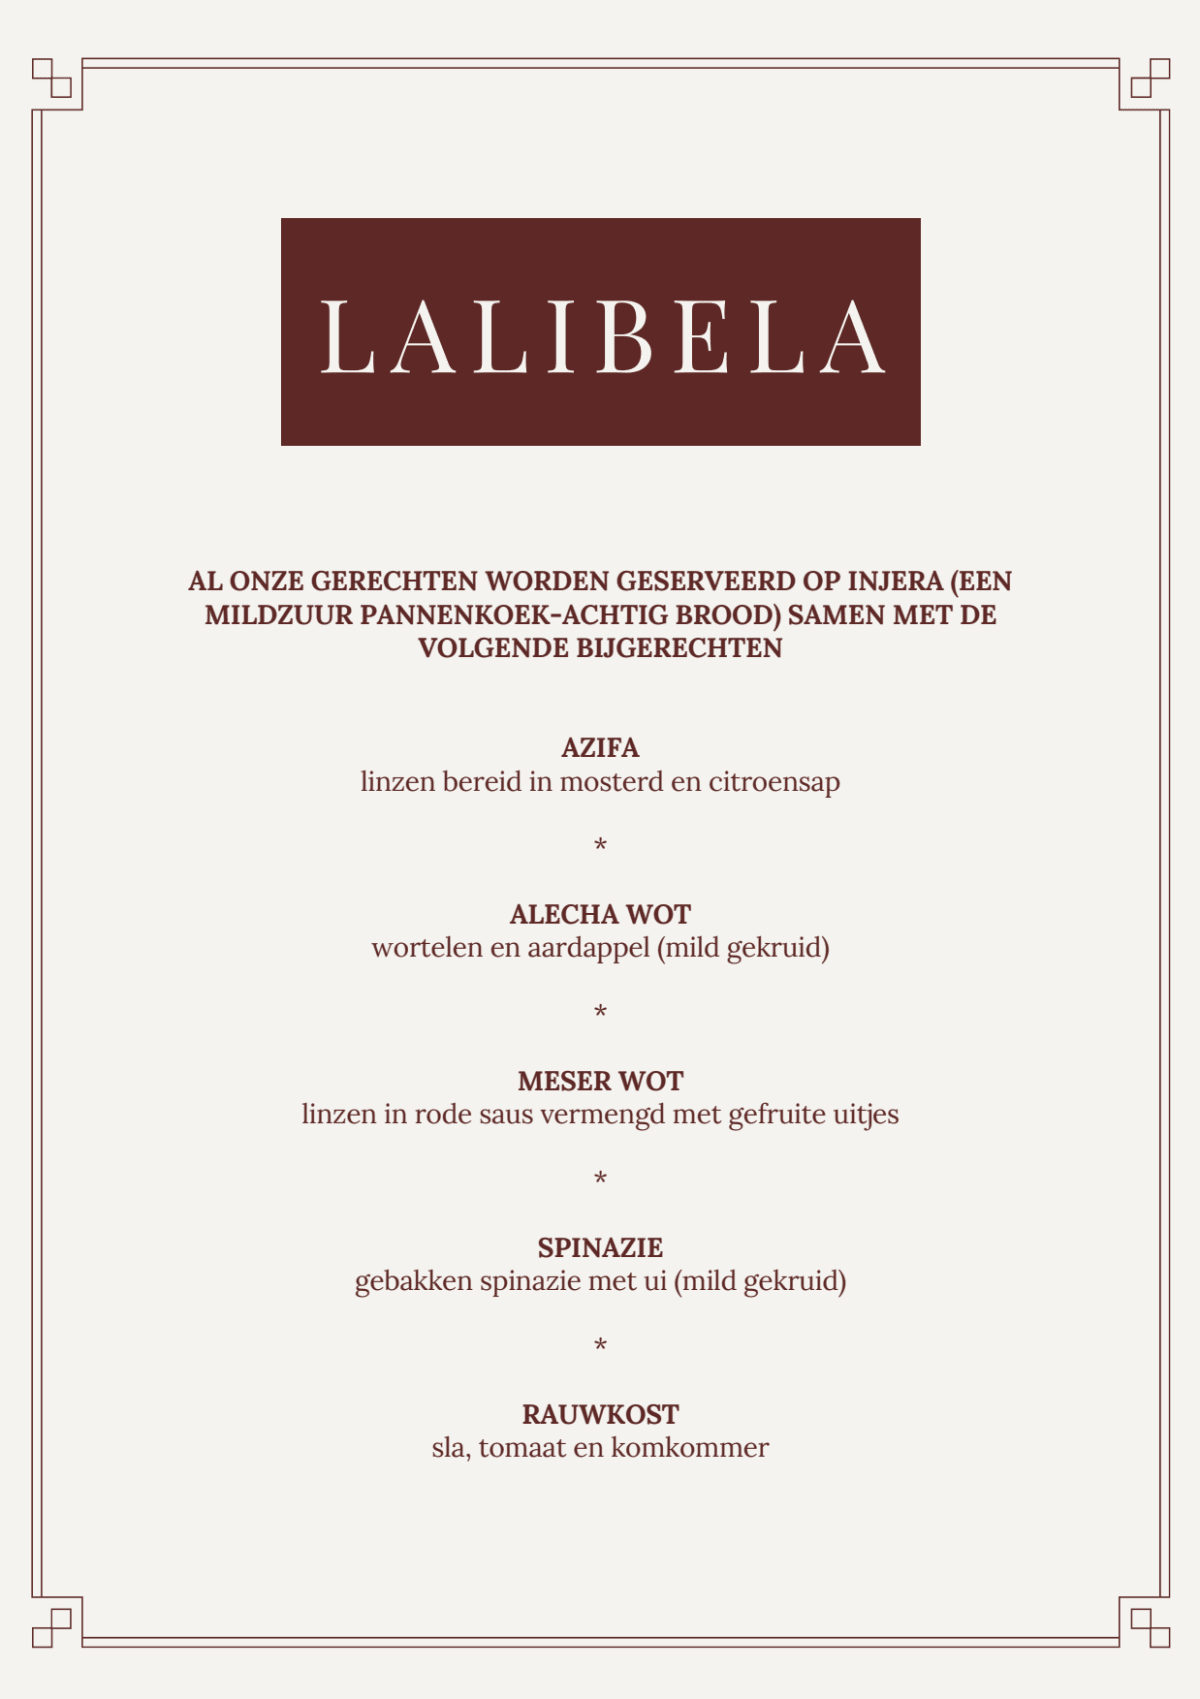 Ethiopisch Restaurant Lalibela menu